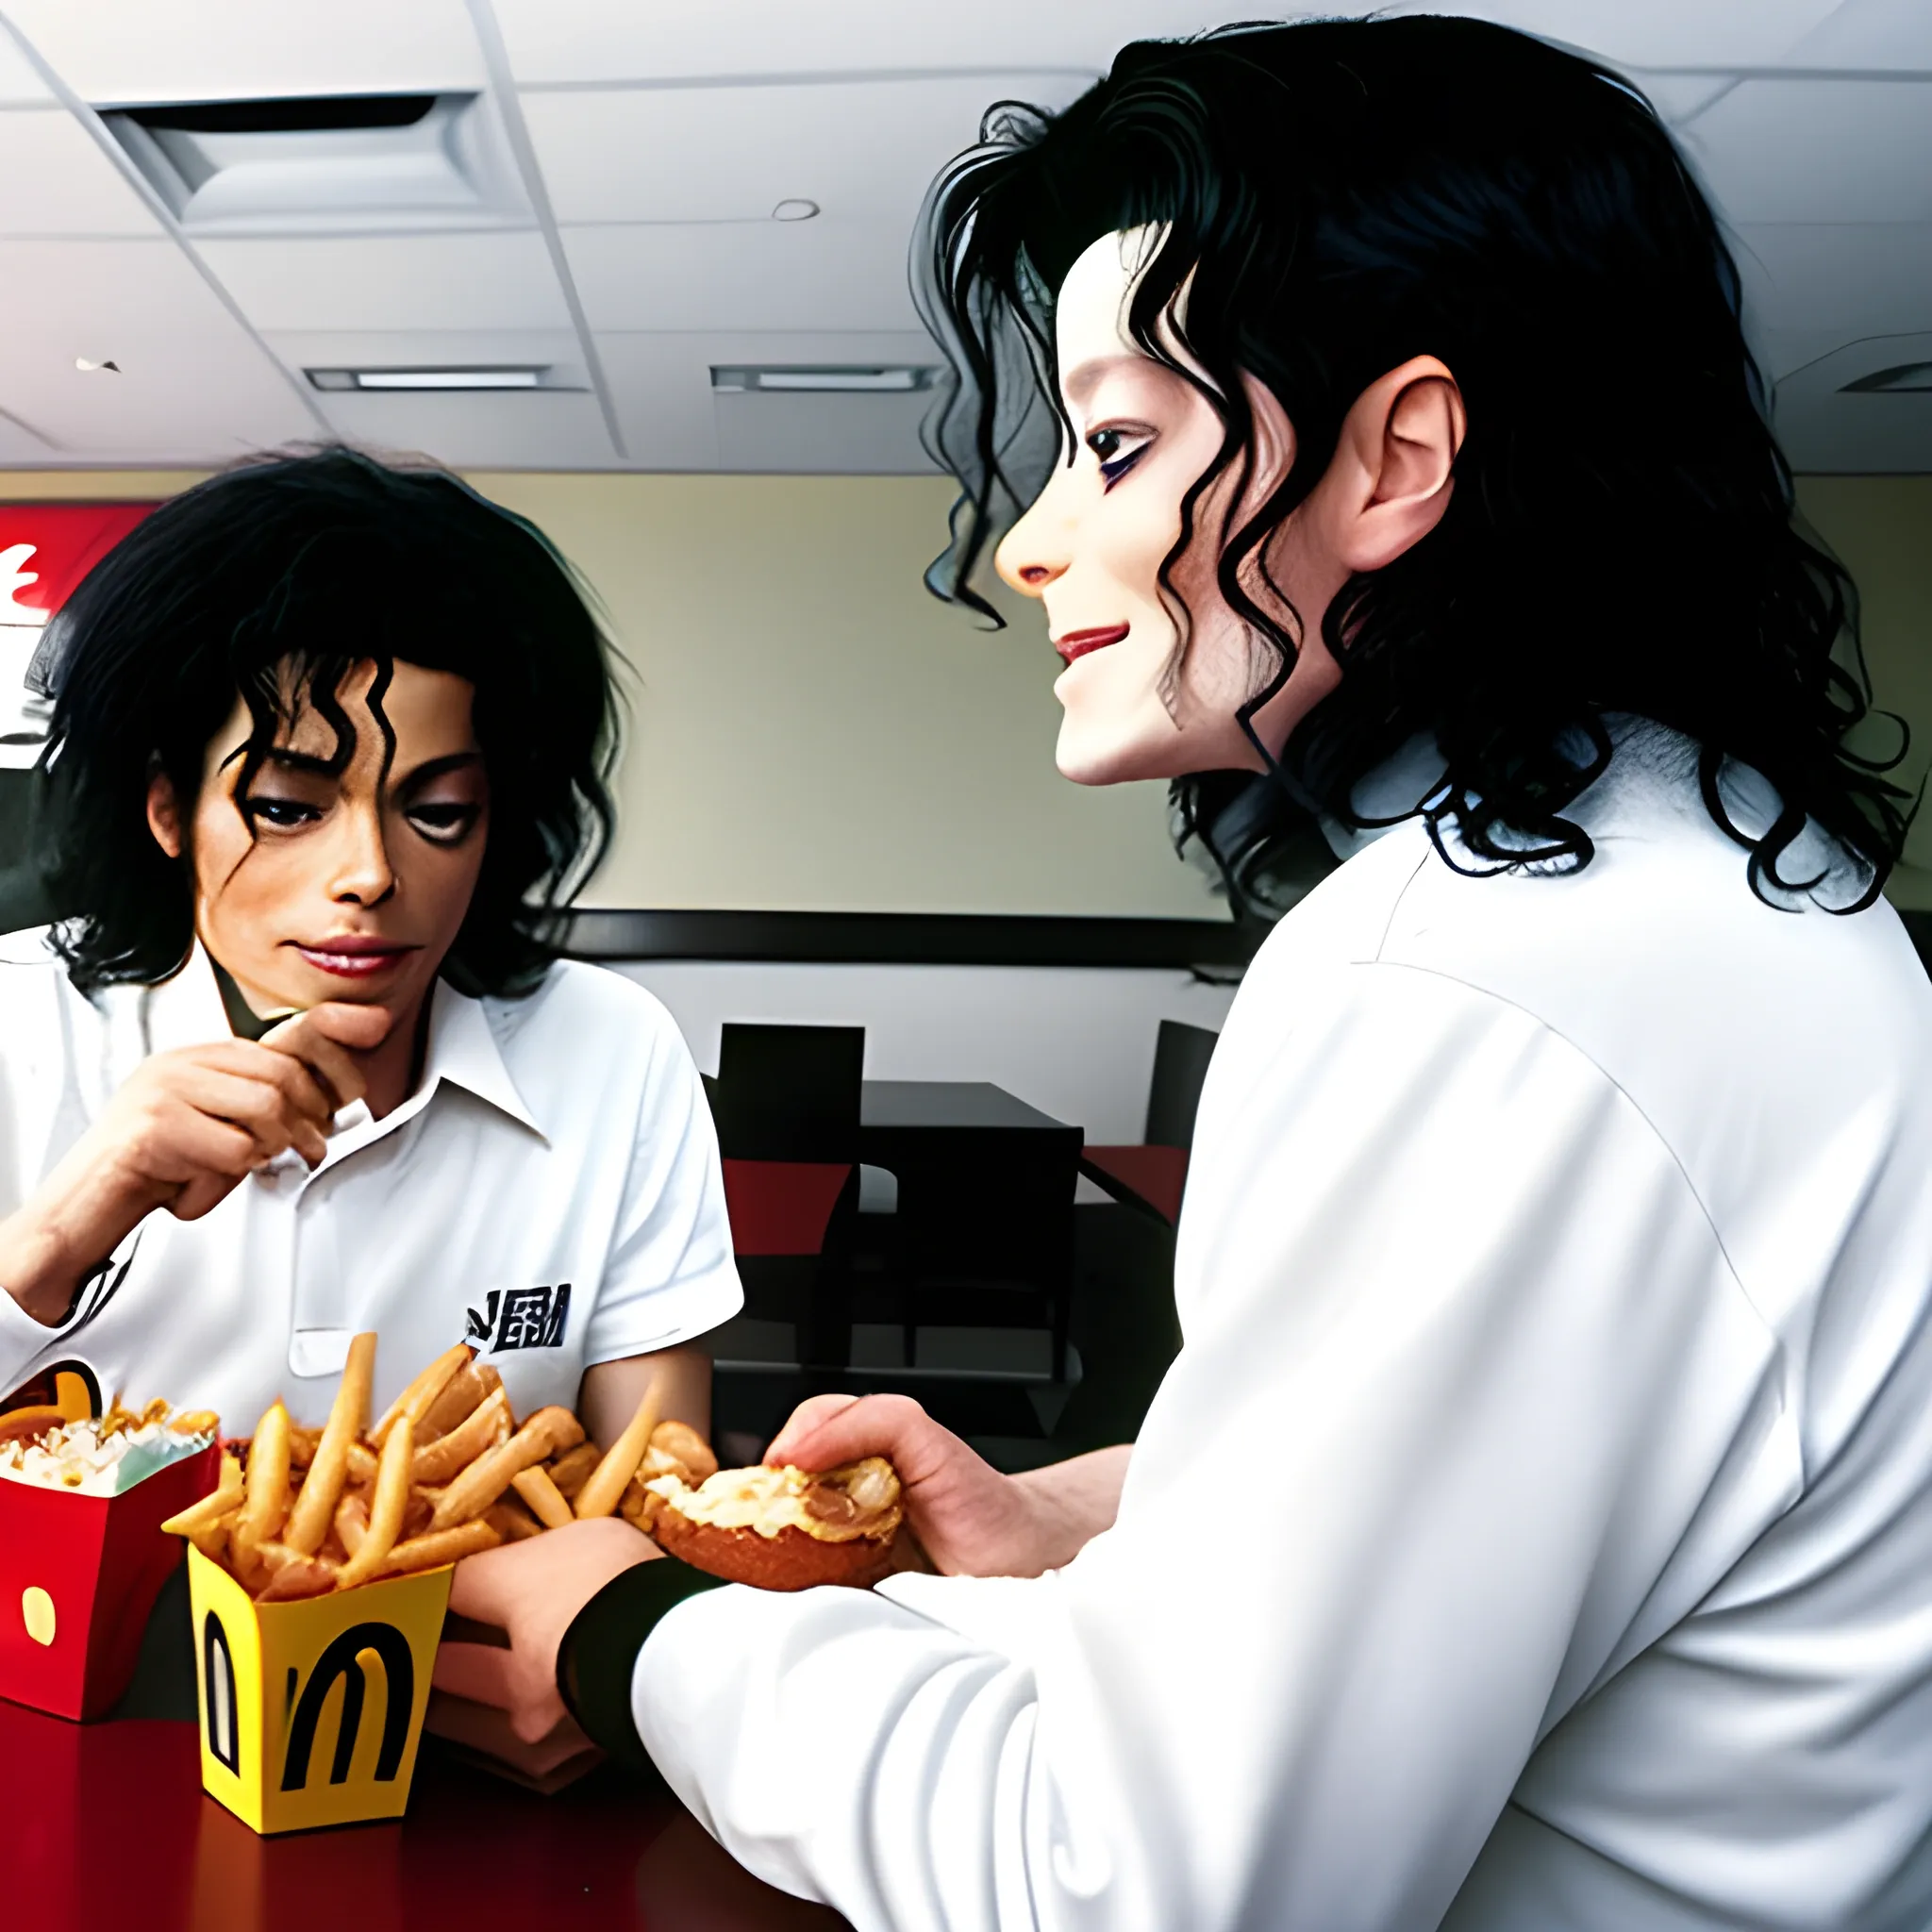 Bill Gates and Michael Jackson eating McDonalds